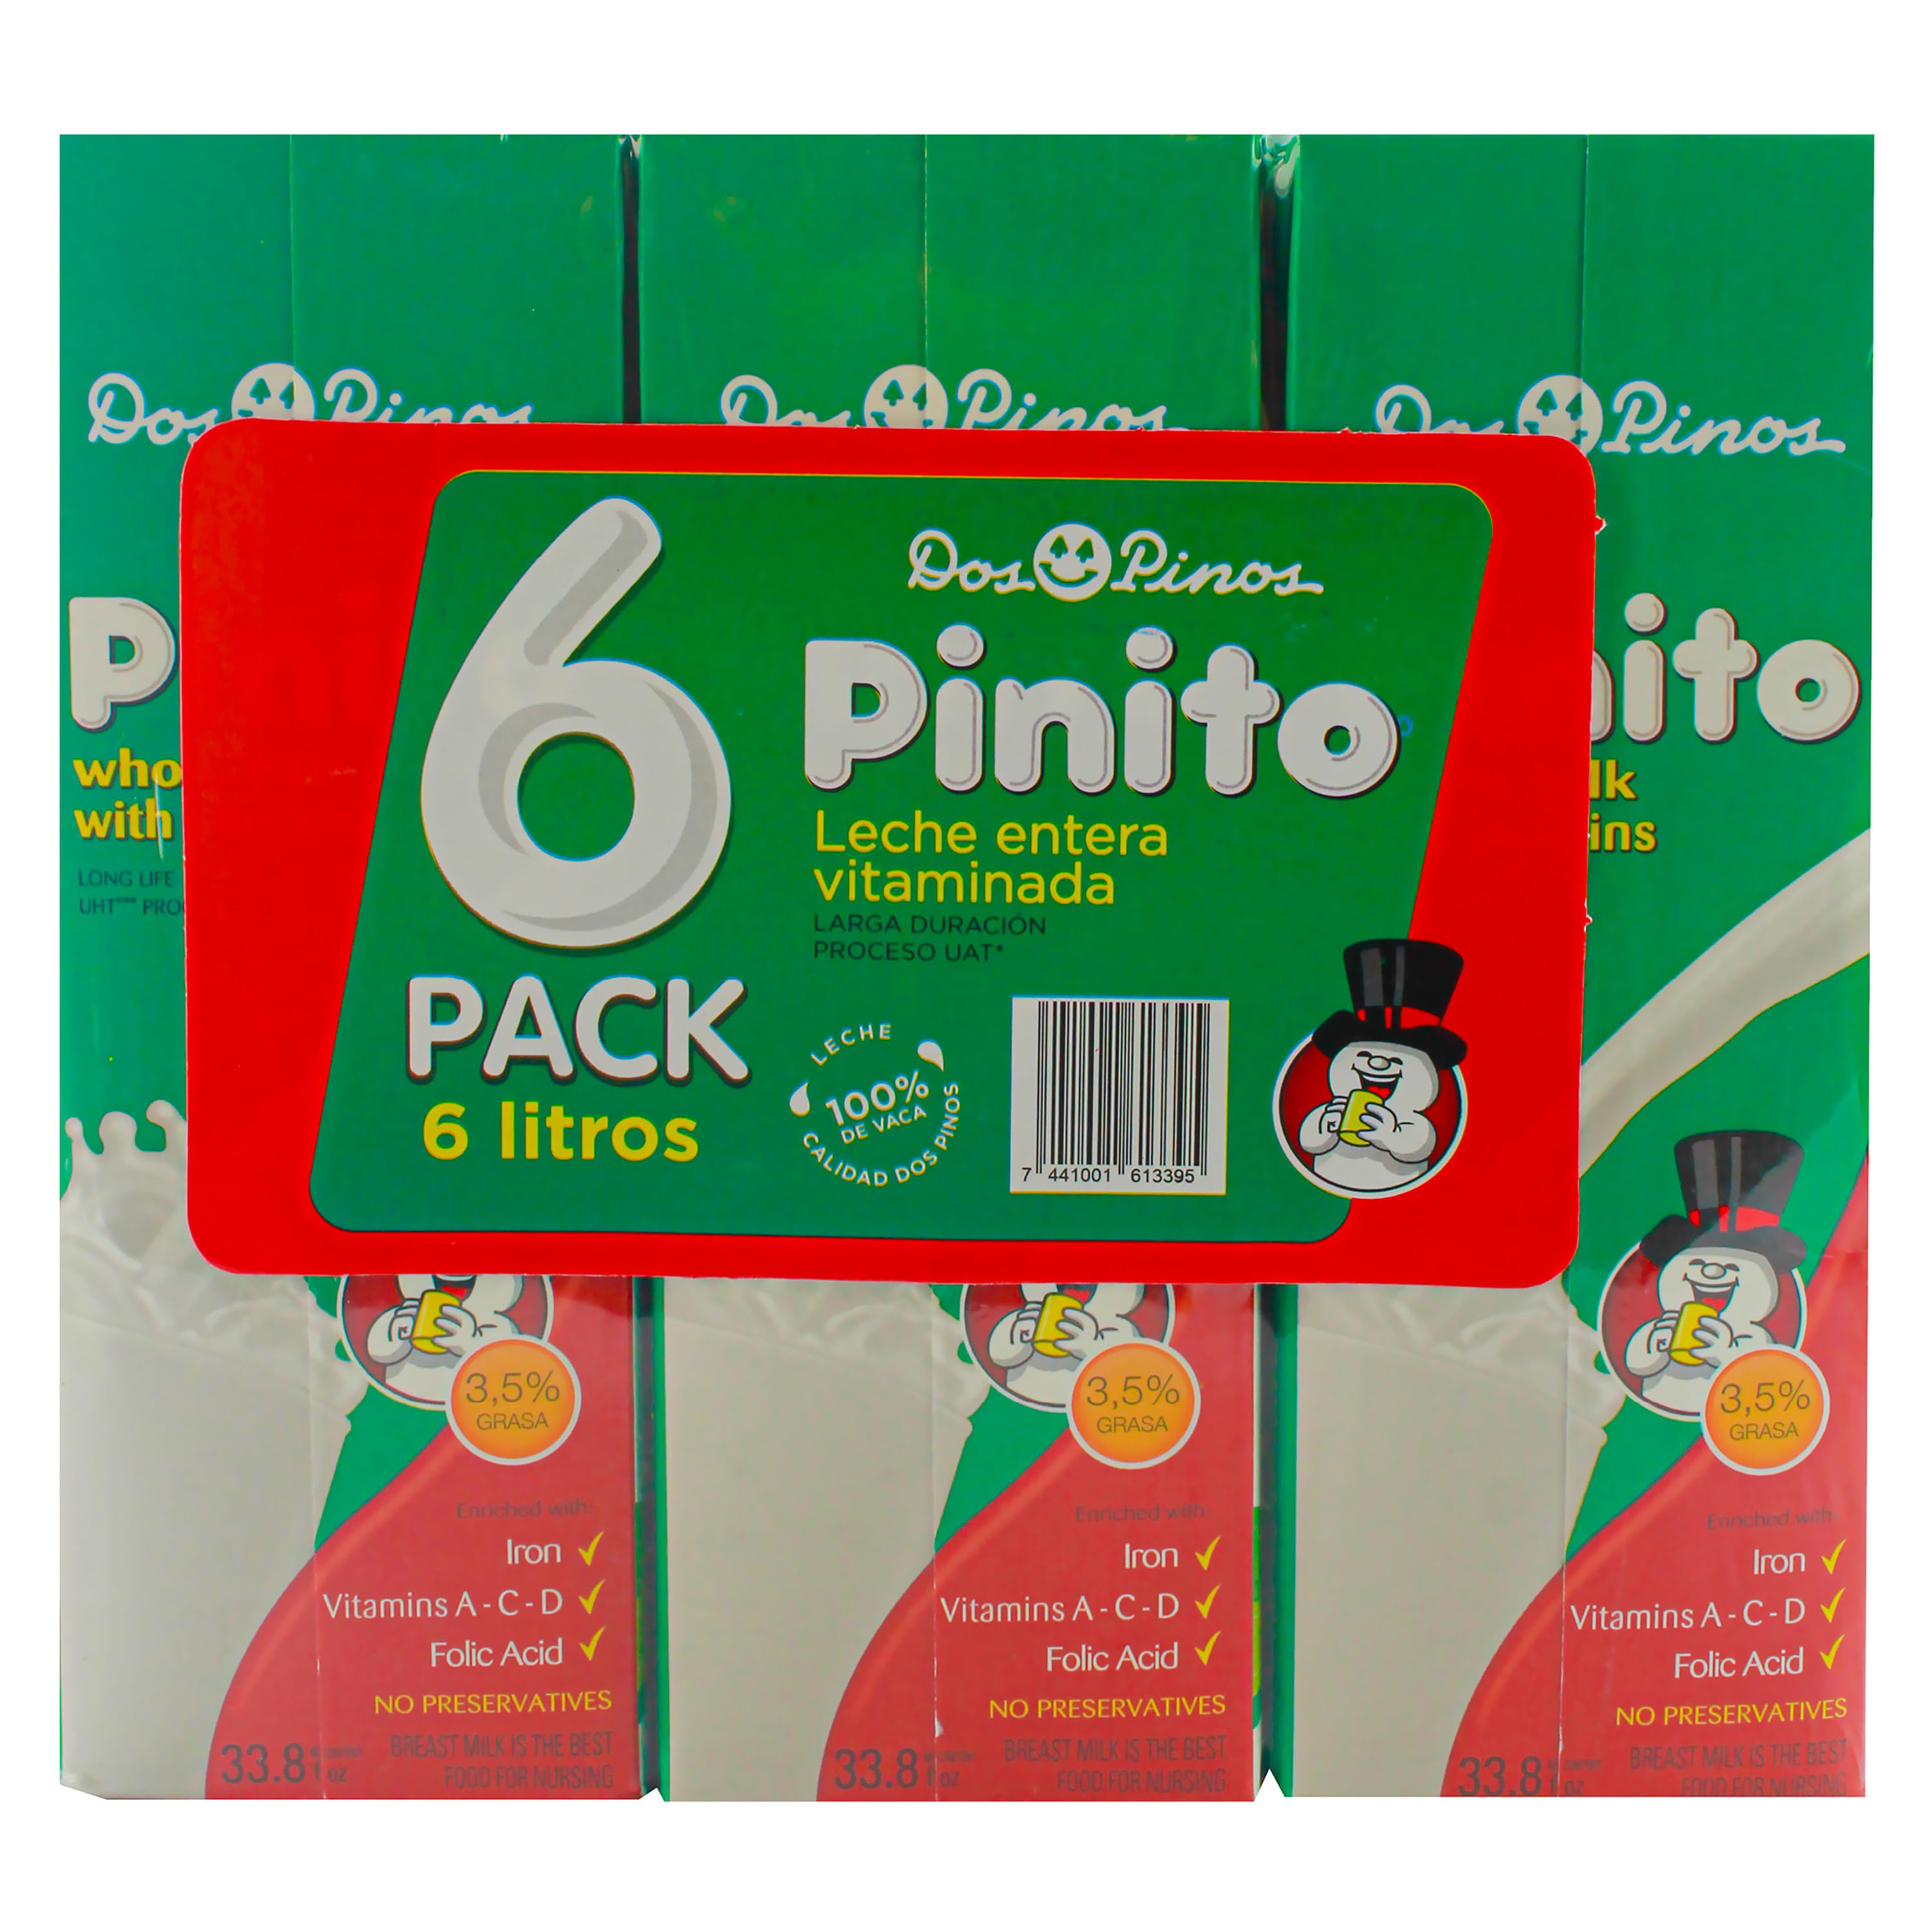 6-Pack-Leche-Dos-Pinos-Entera-Pinito-1000ml-1-33385